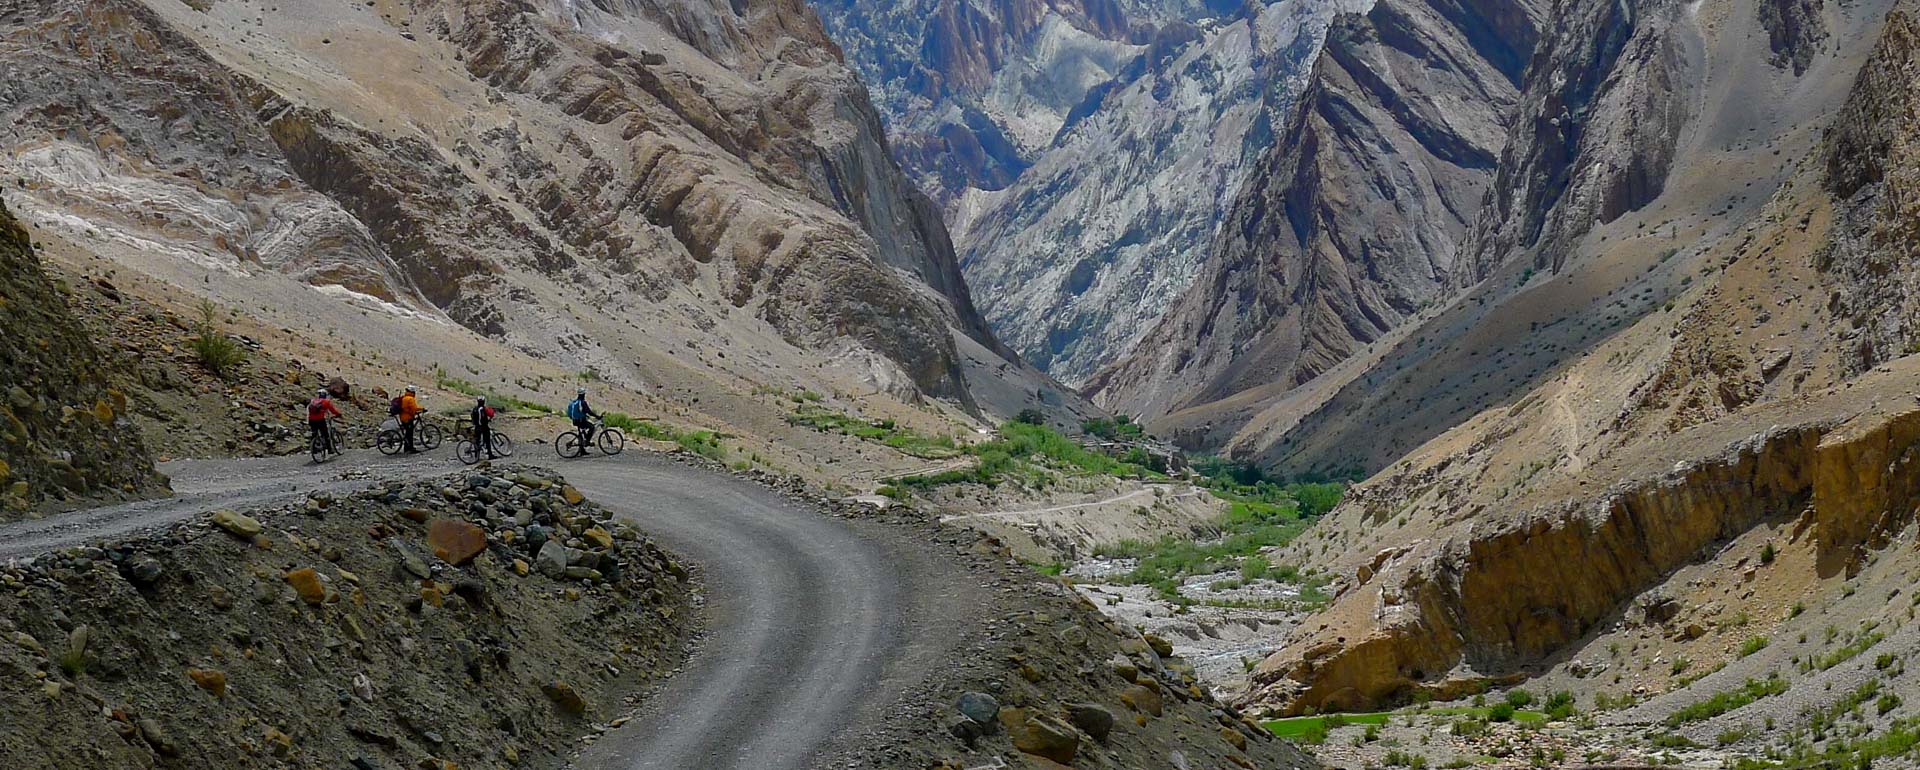 Bike-Expedition im Himalaya